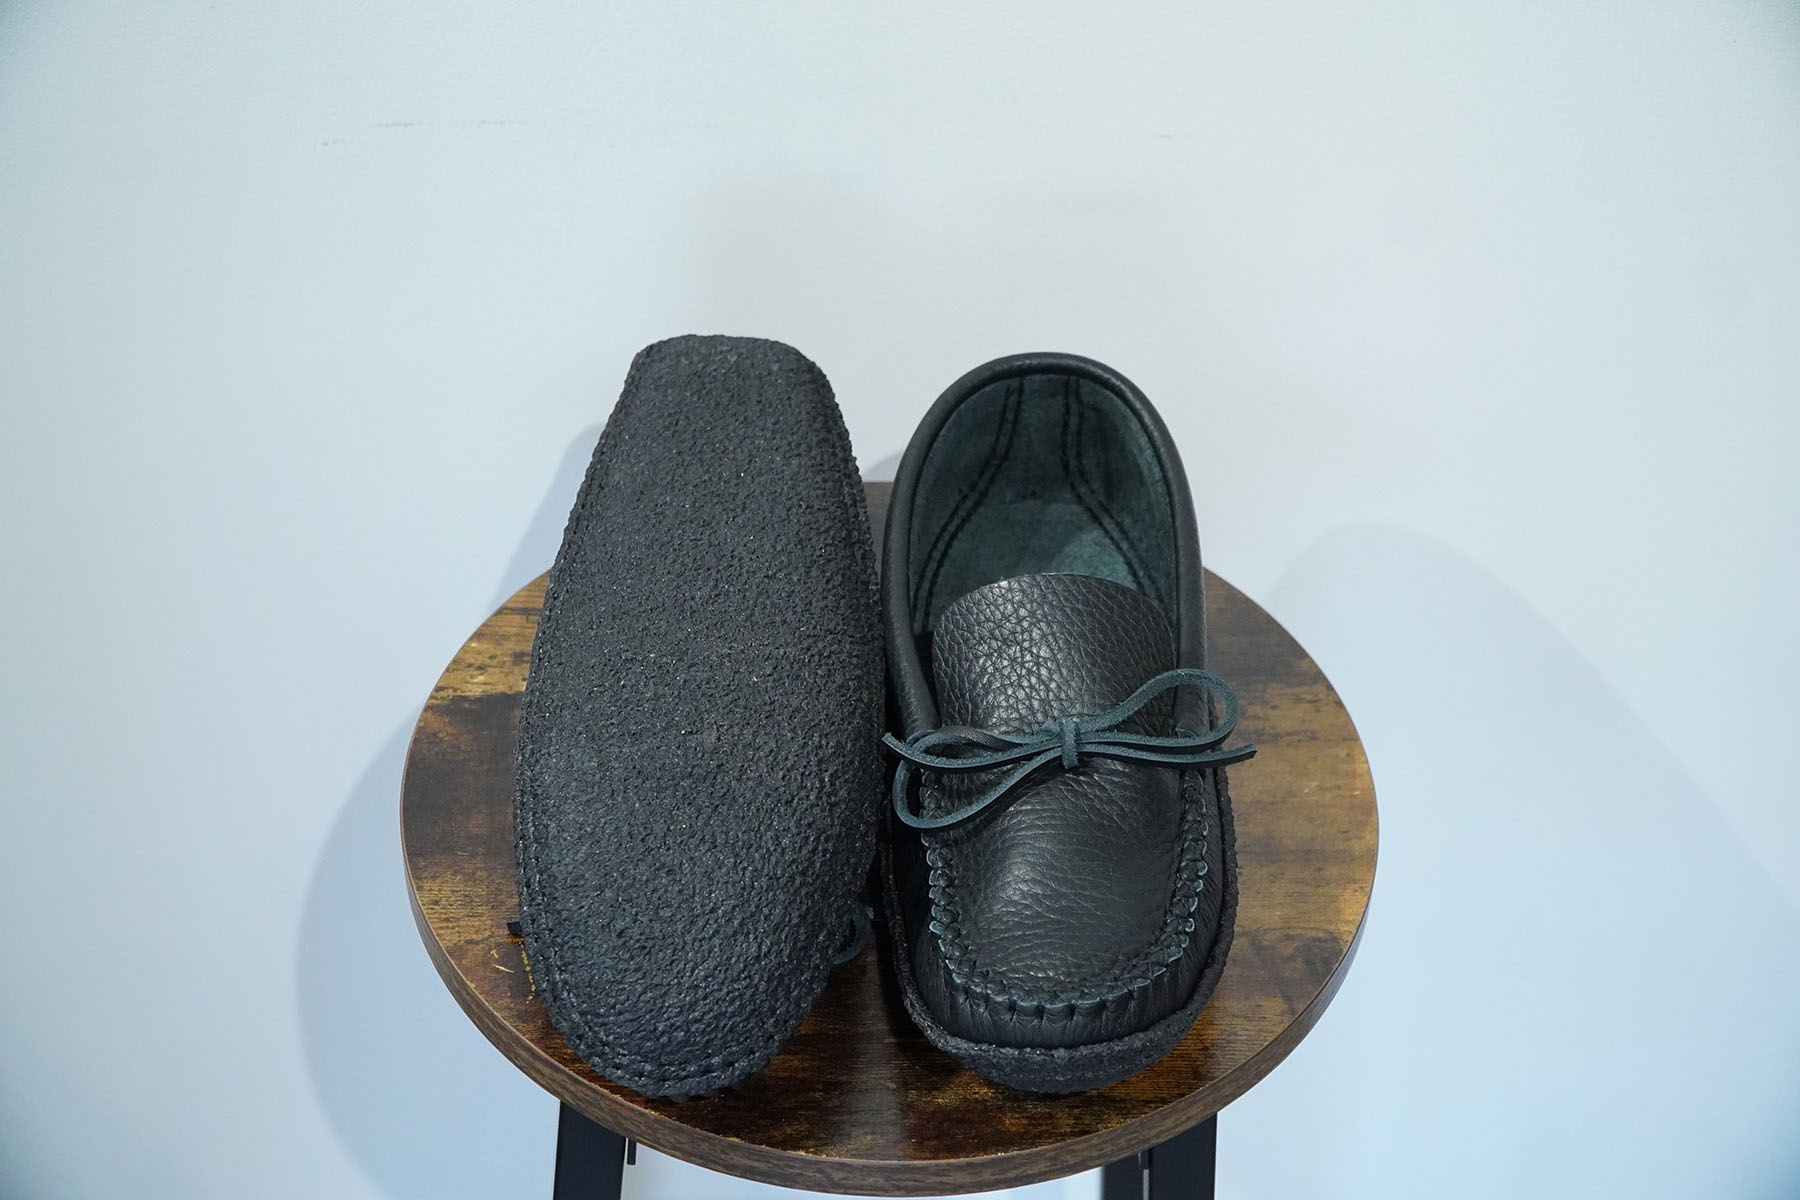 bastien industries handsawn moccasins black crepe sole